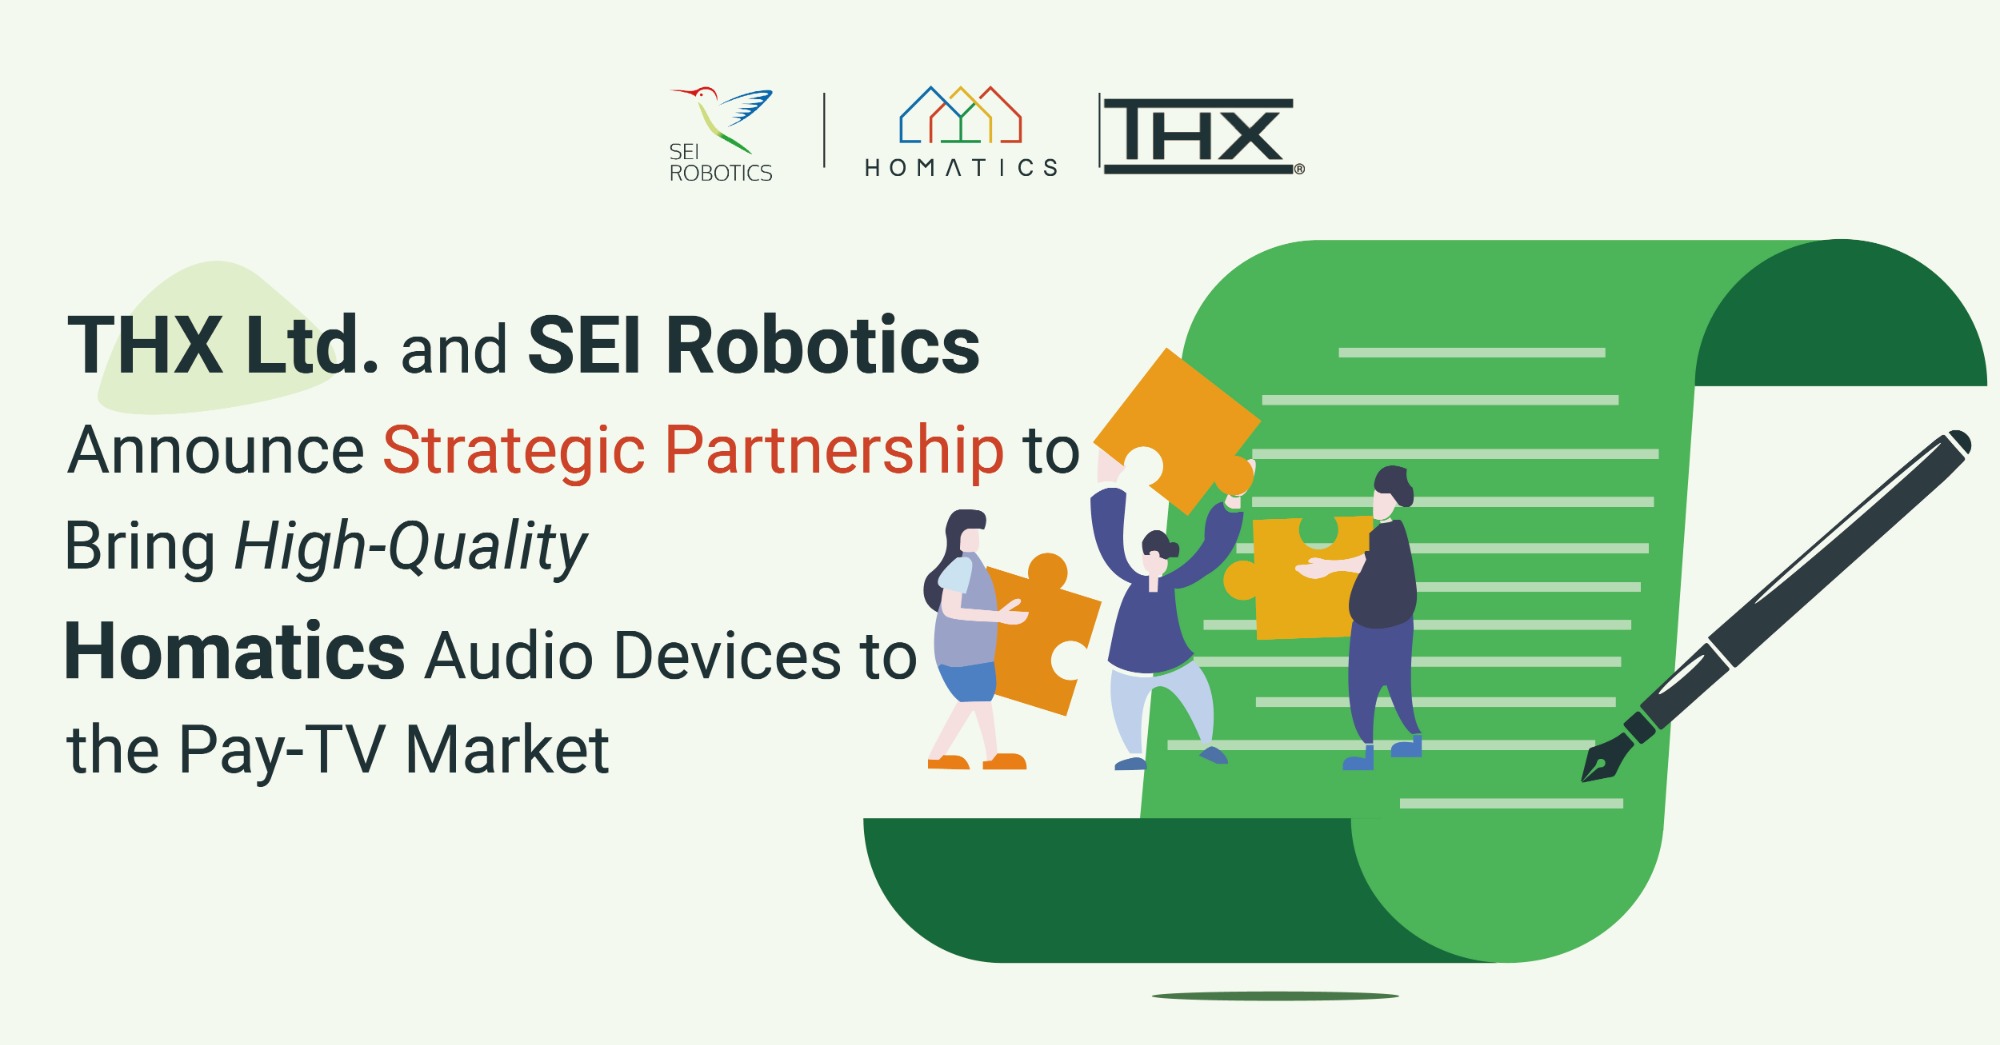 THX Ltd. and SEI Robotics Announce Strategic Partnership to Bring High-Quality Homatics Audio Devices to the Pay-TV Market